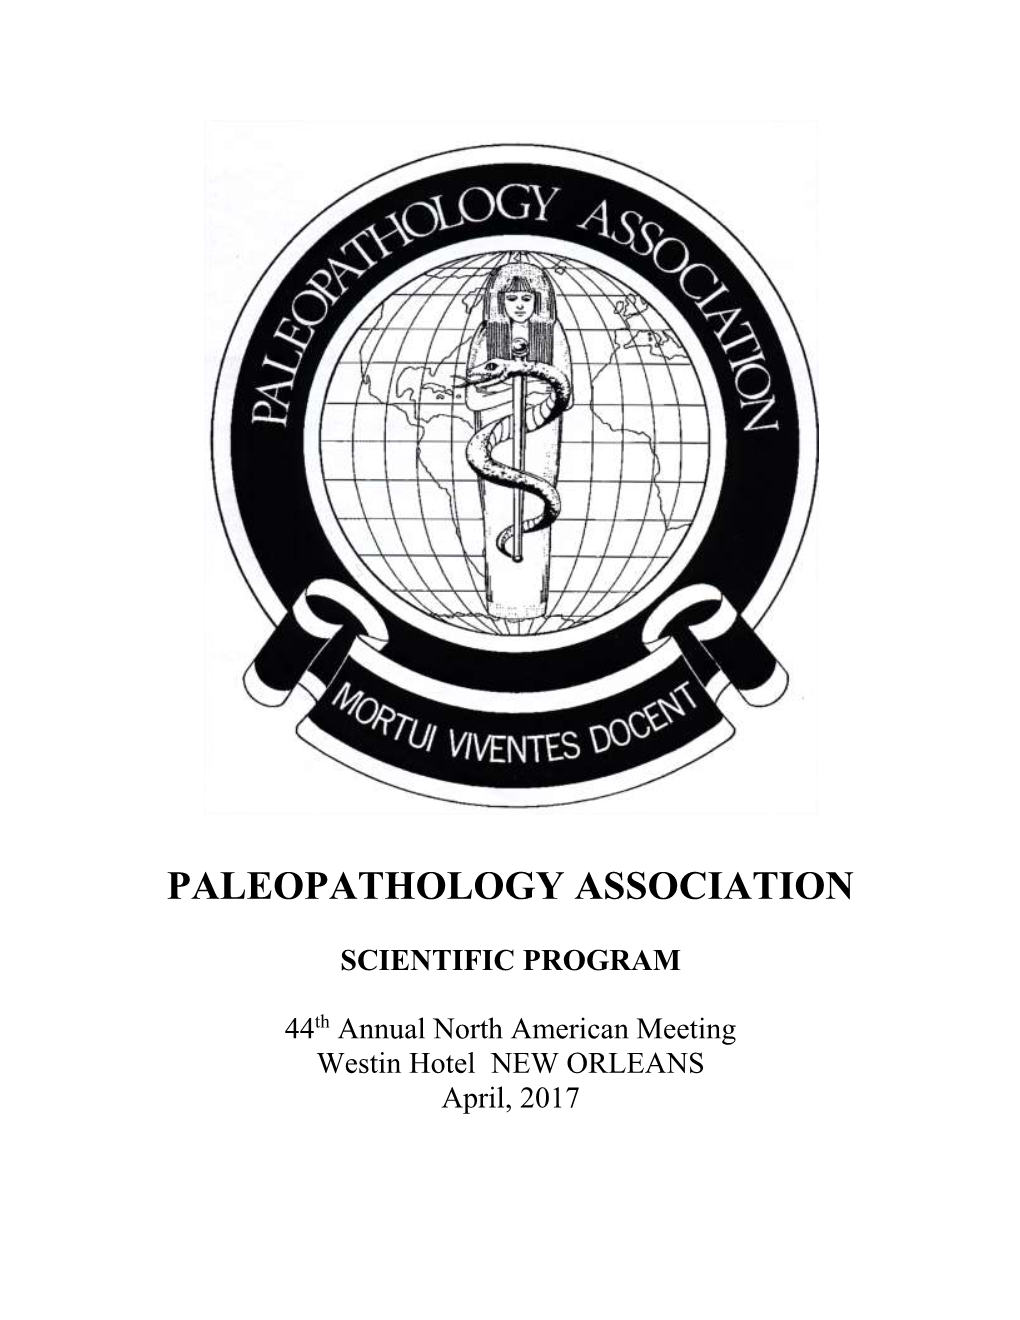 Paleopathology Association Scientific Program